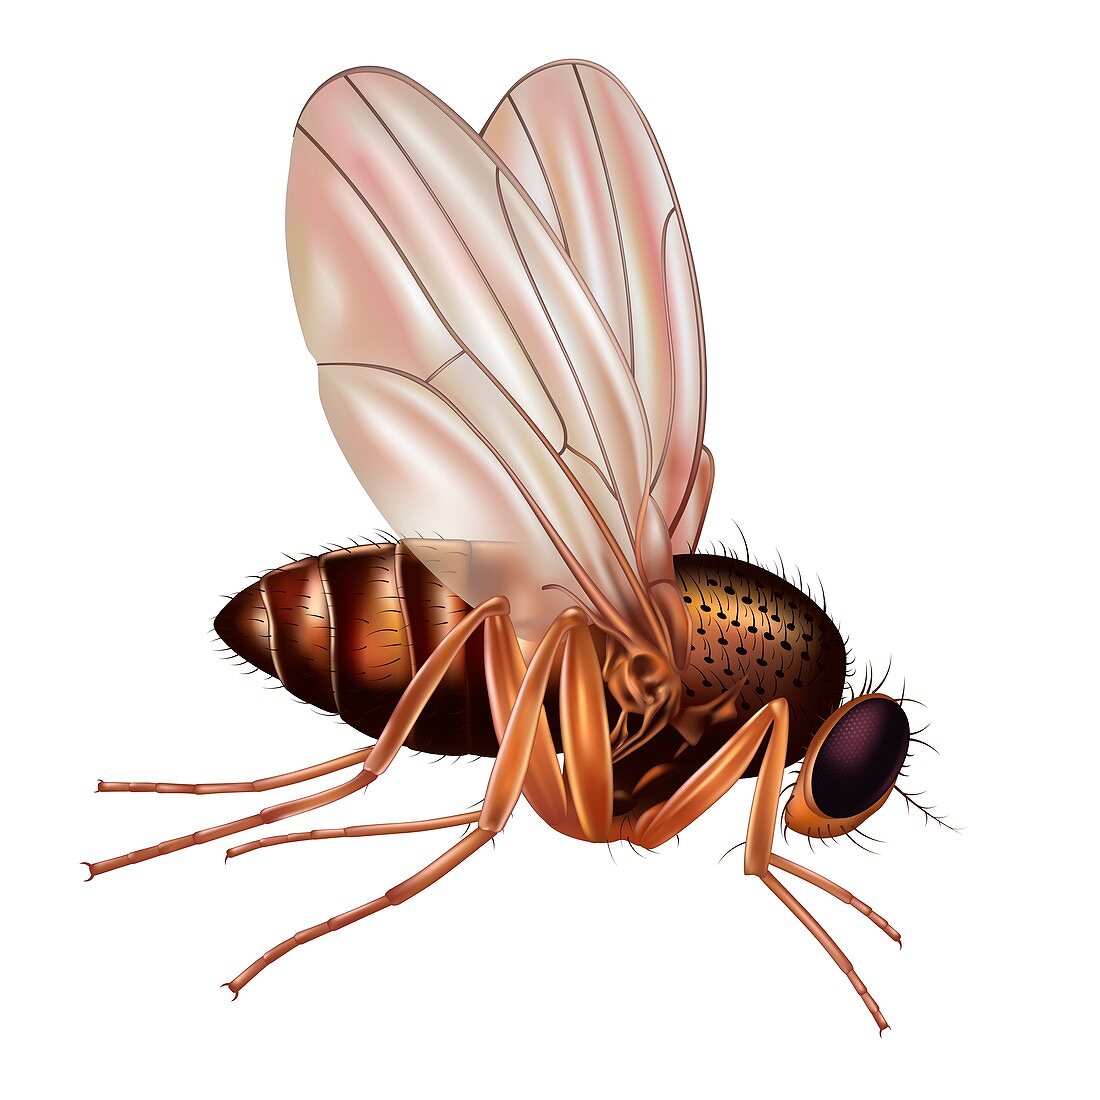 Fruit fly, illustration